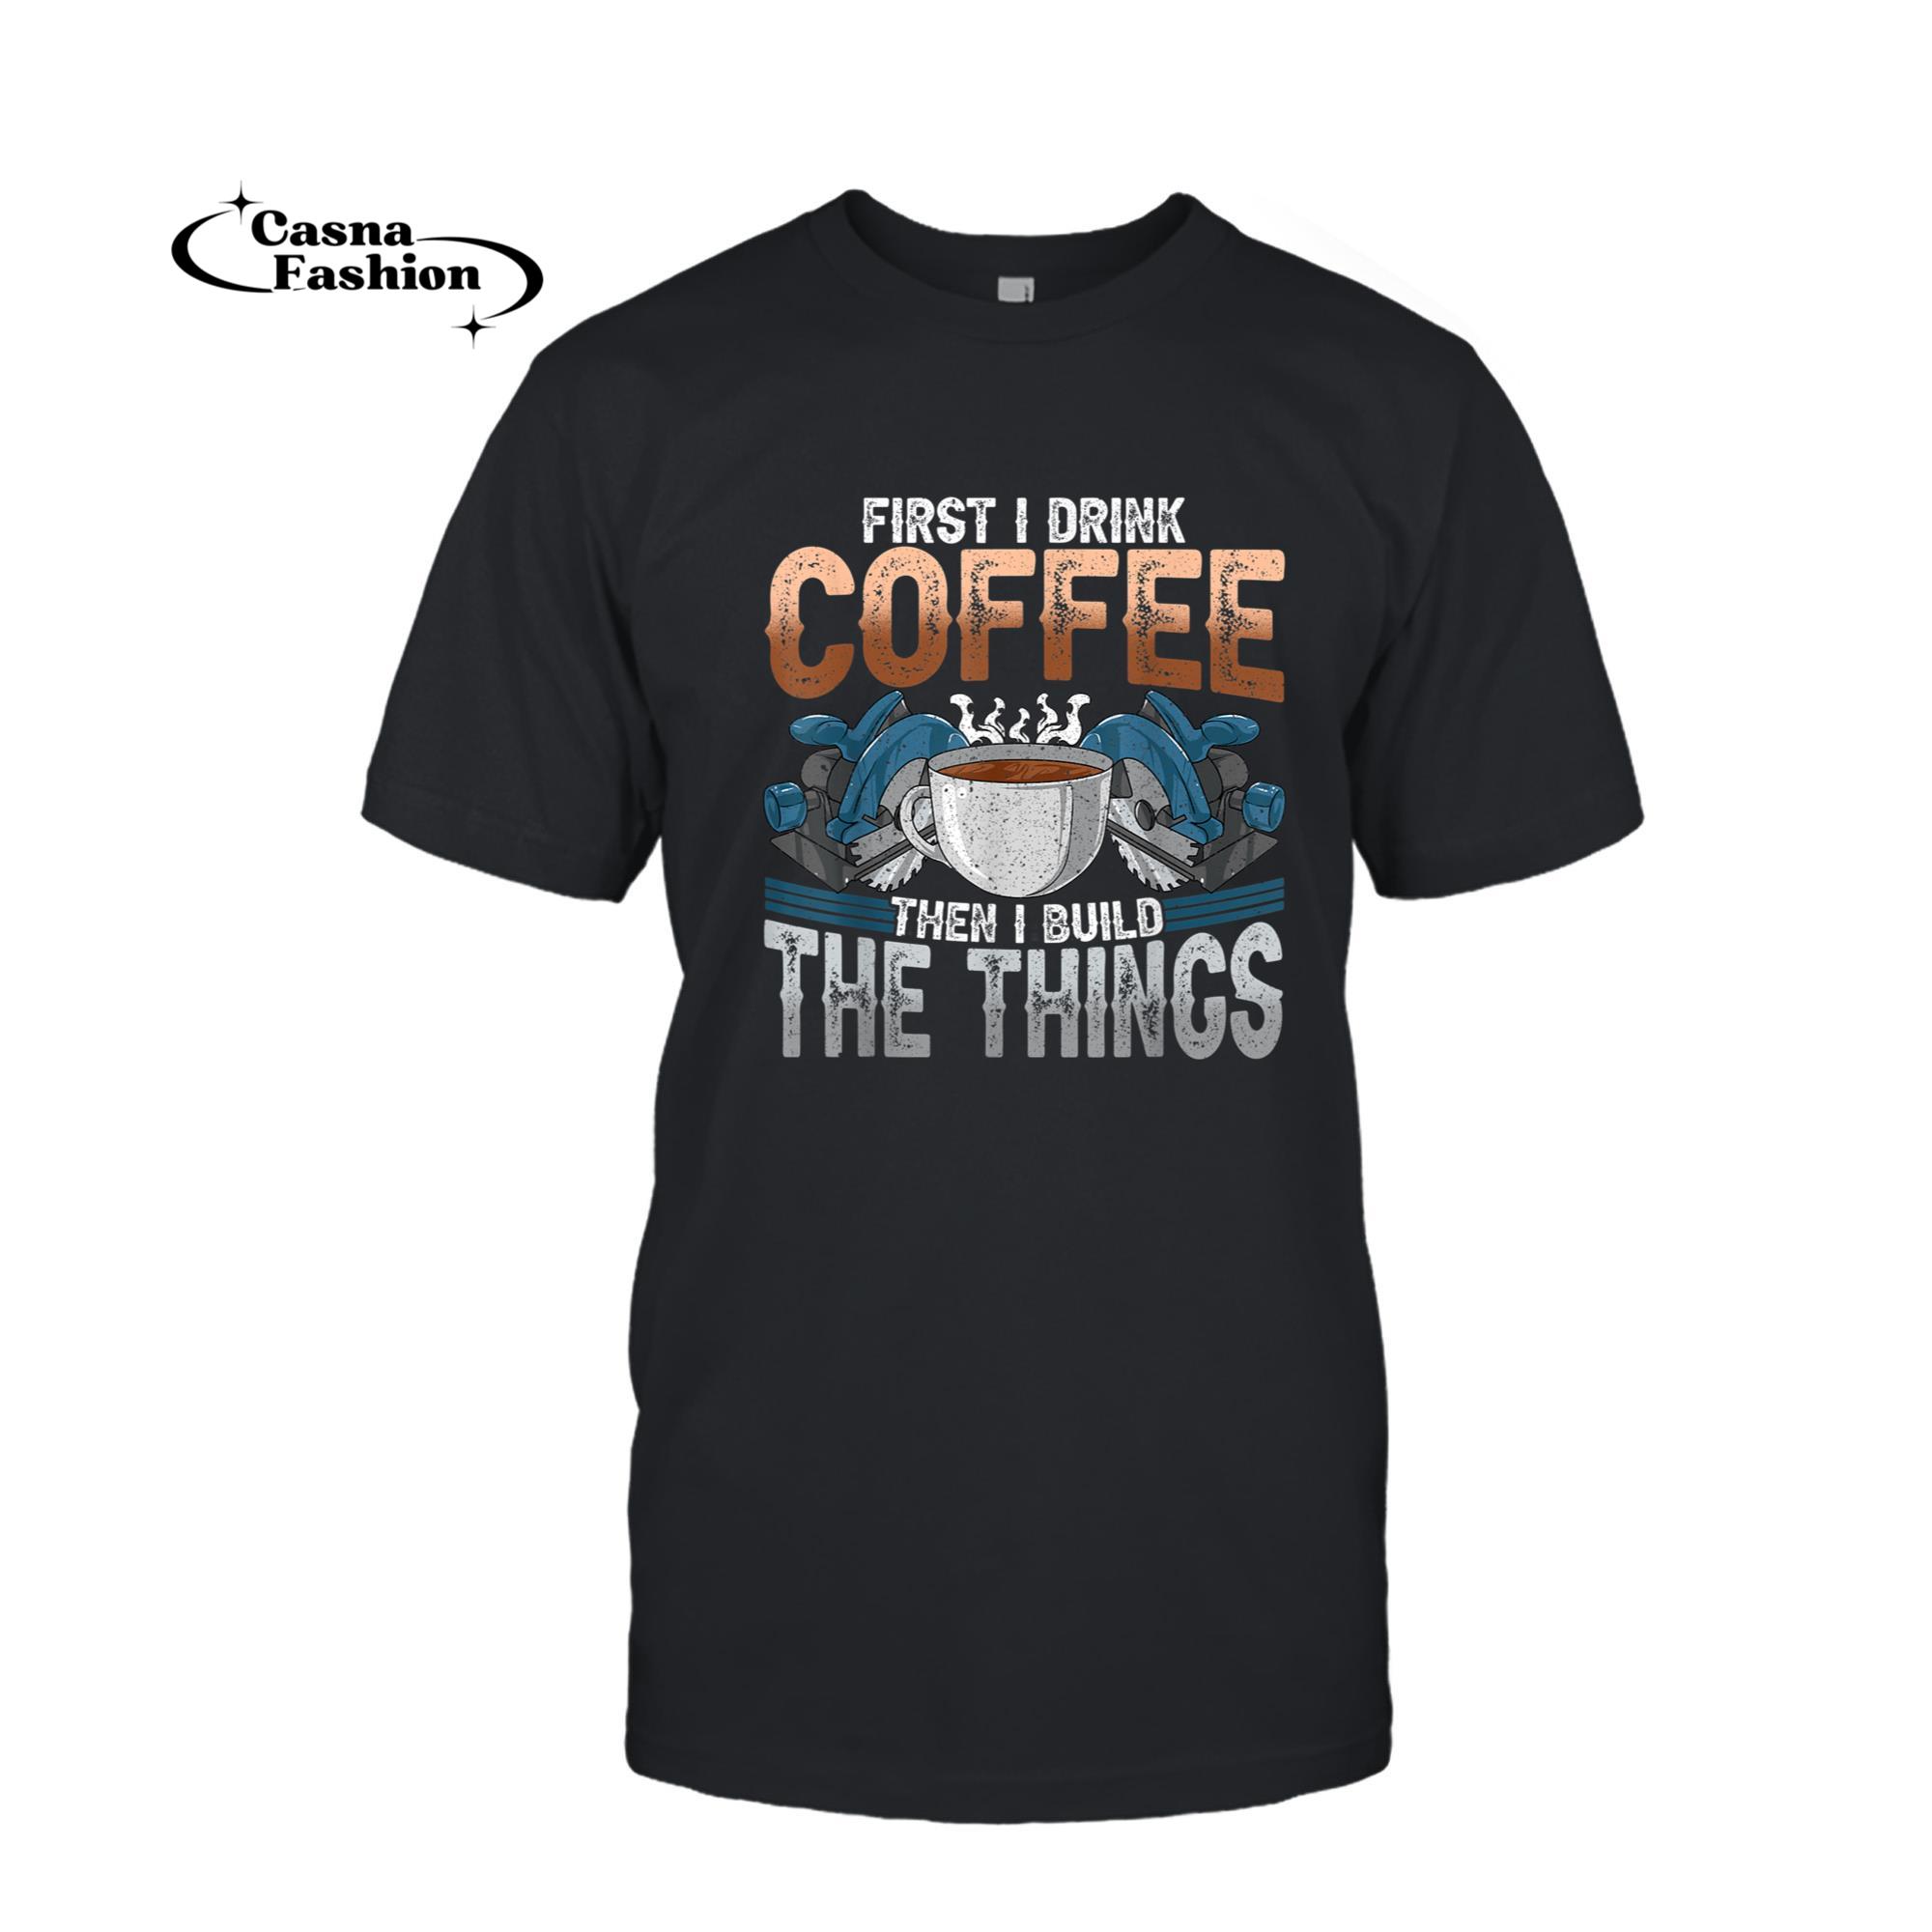 casnafashion_T-shirt_Woodworking Shirt Funny Carpenter Coffee And Build Things T-Shirt_T-shirt_Black